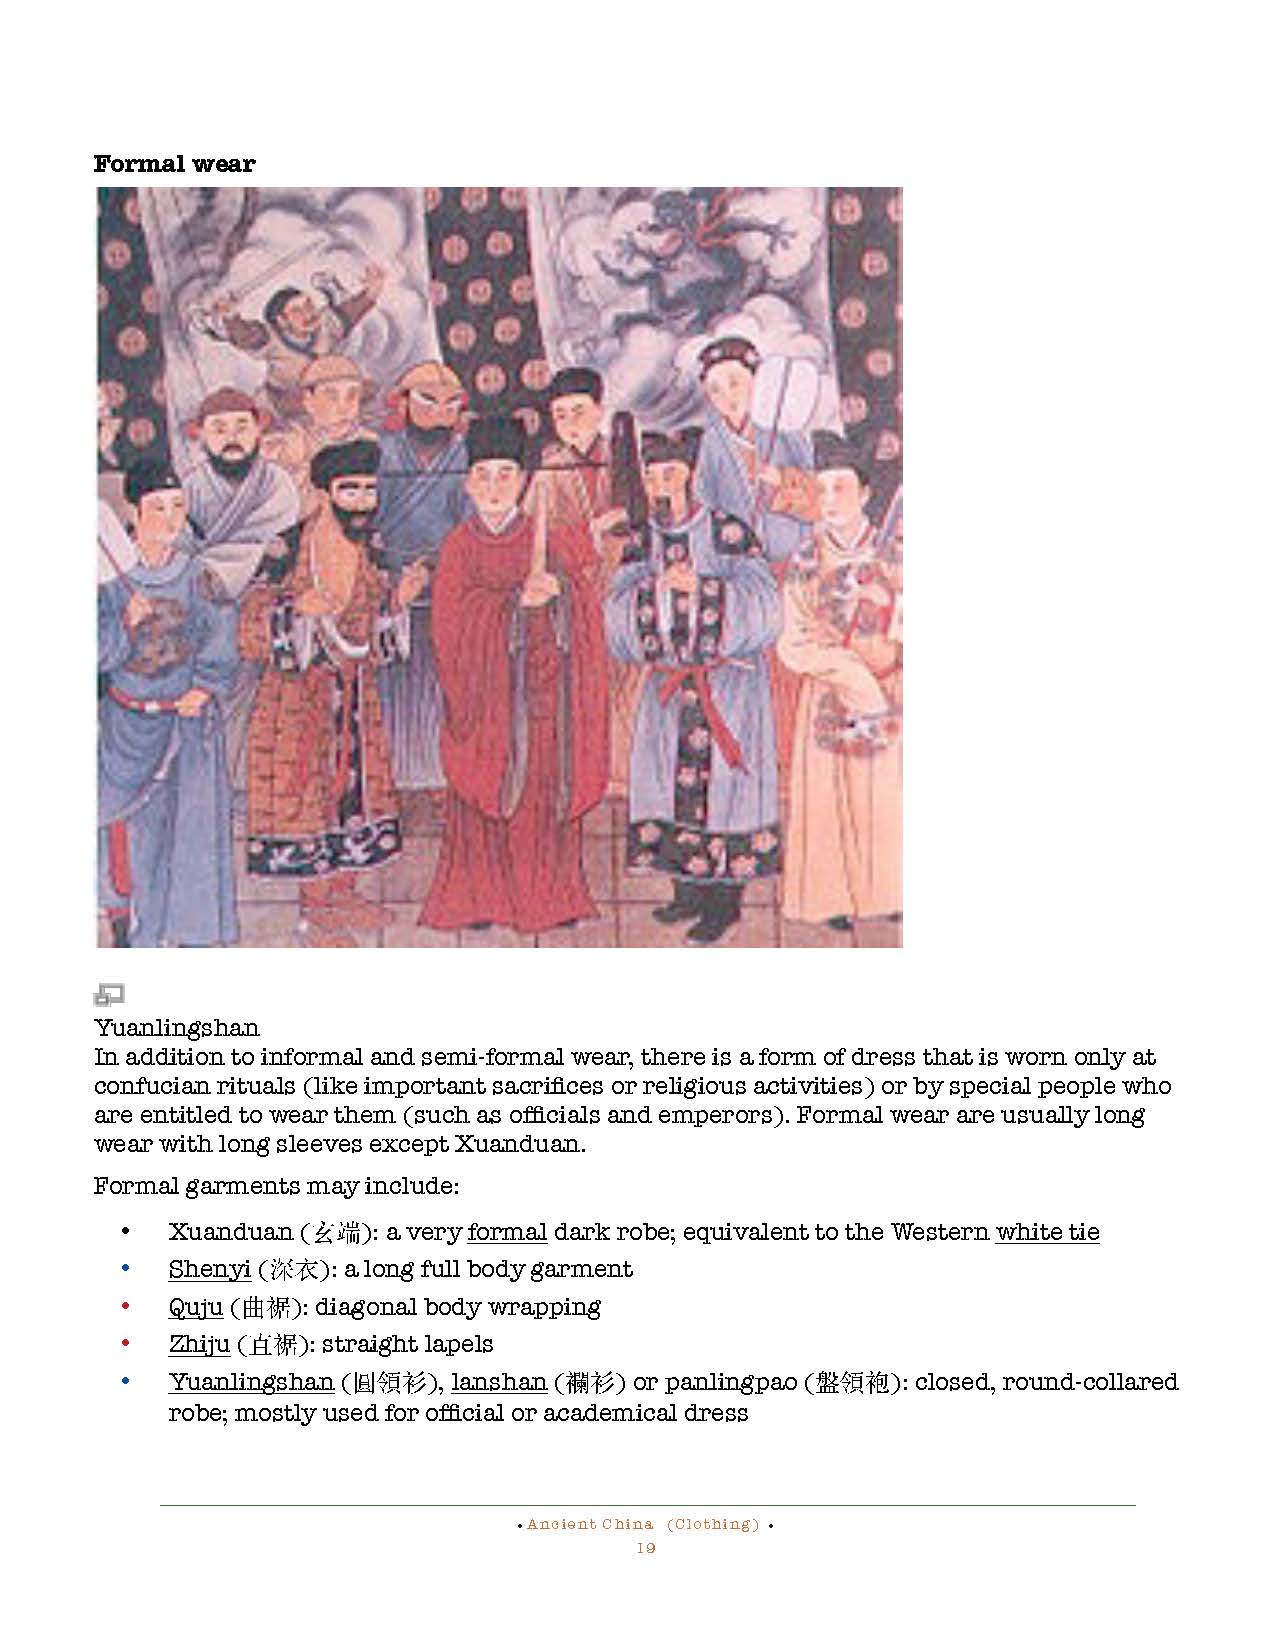 HOCE- Ancient China Notes (clothing)_Page_19.jpg